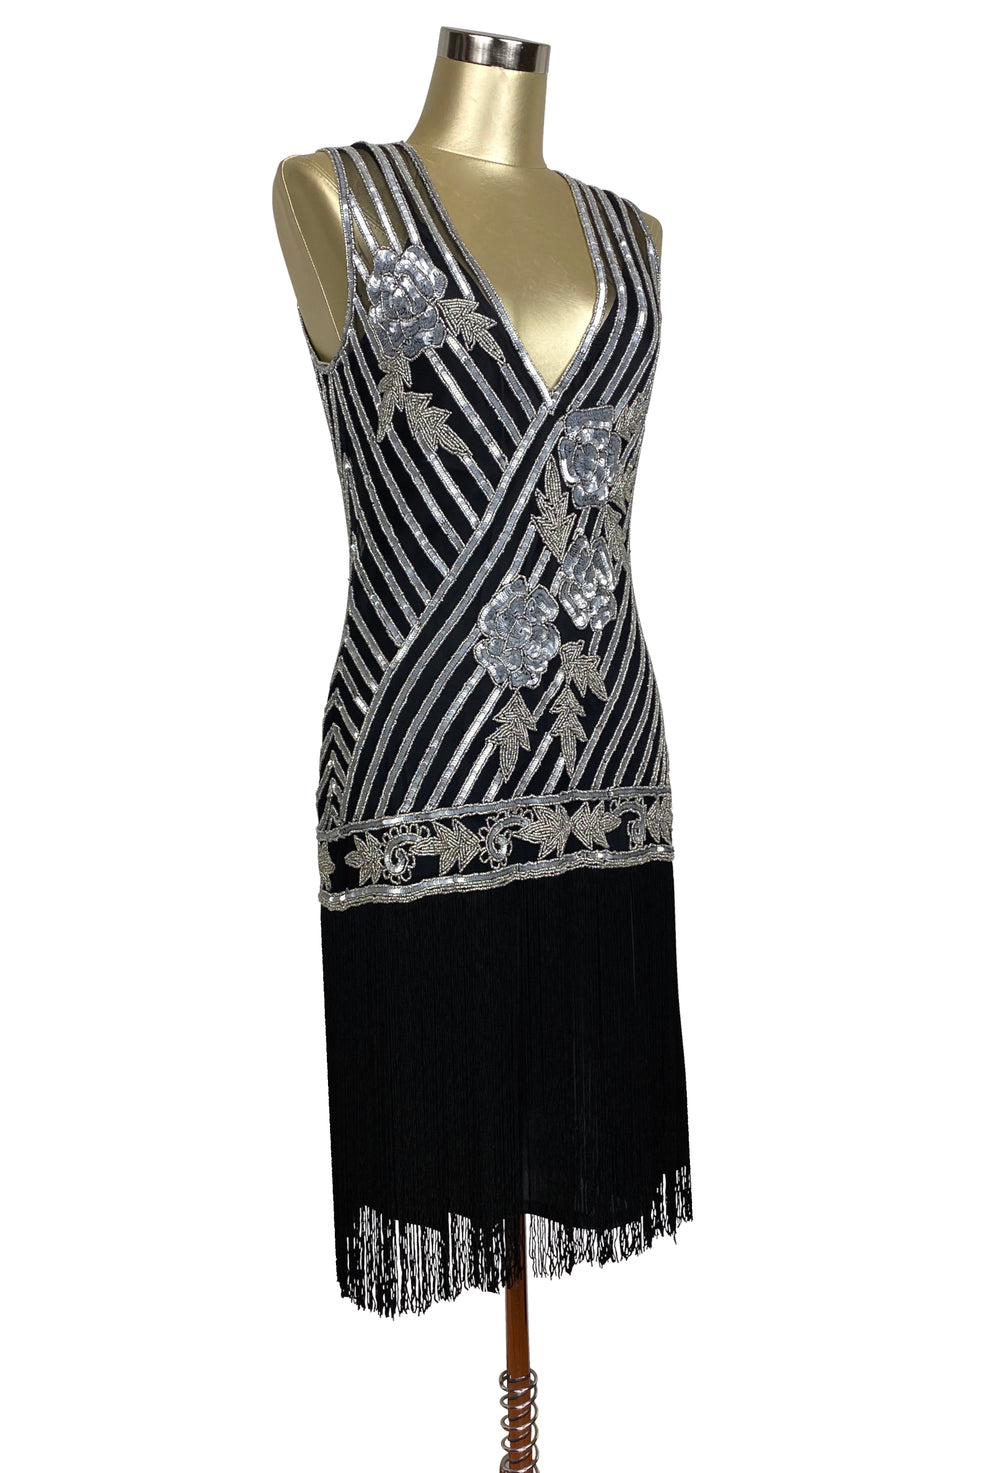 1920's Style Flapper Fringe Party Dress - The Original Artist Silver on Black